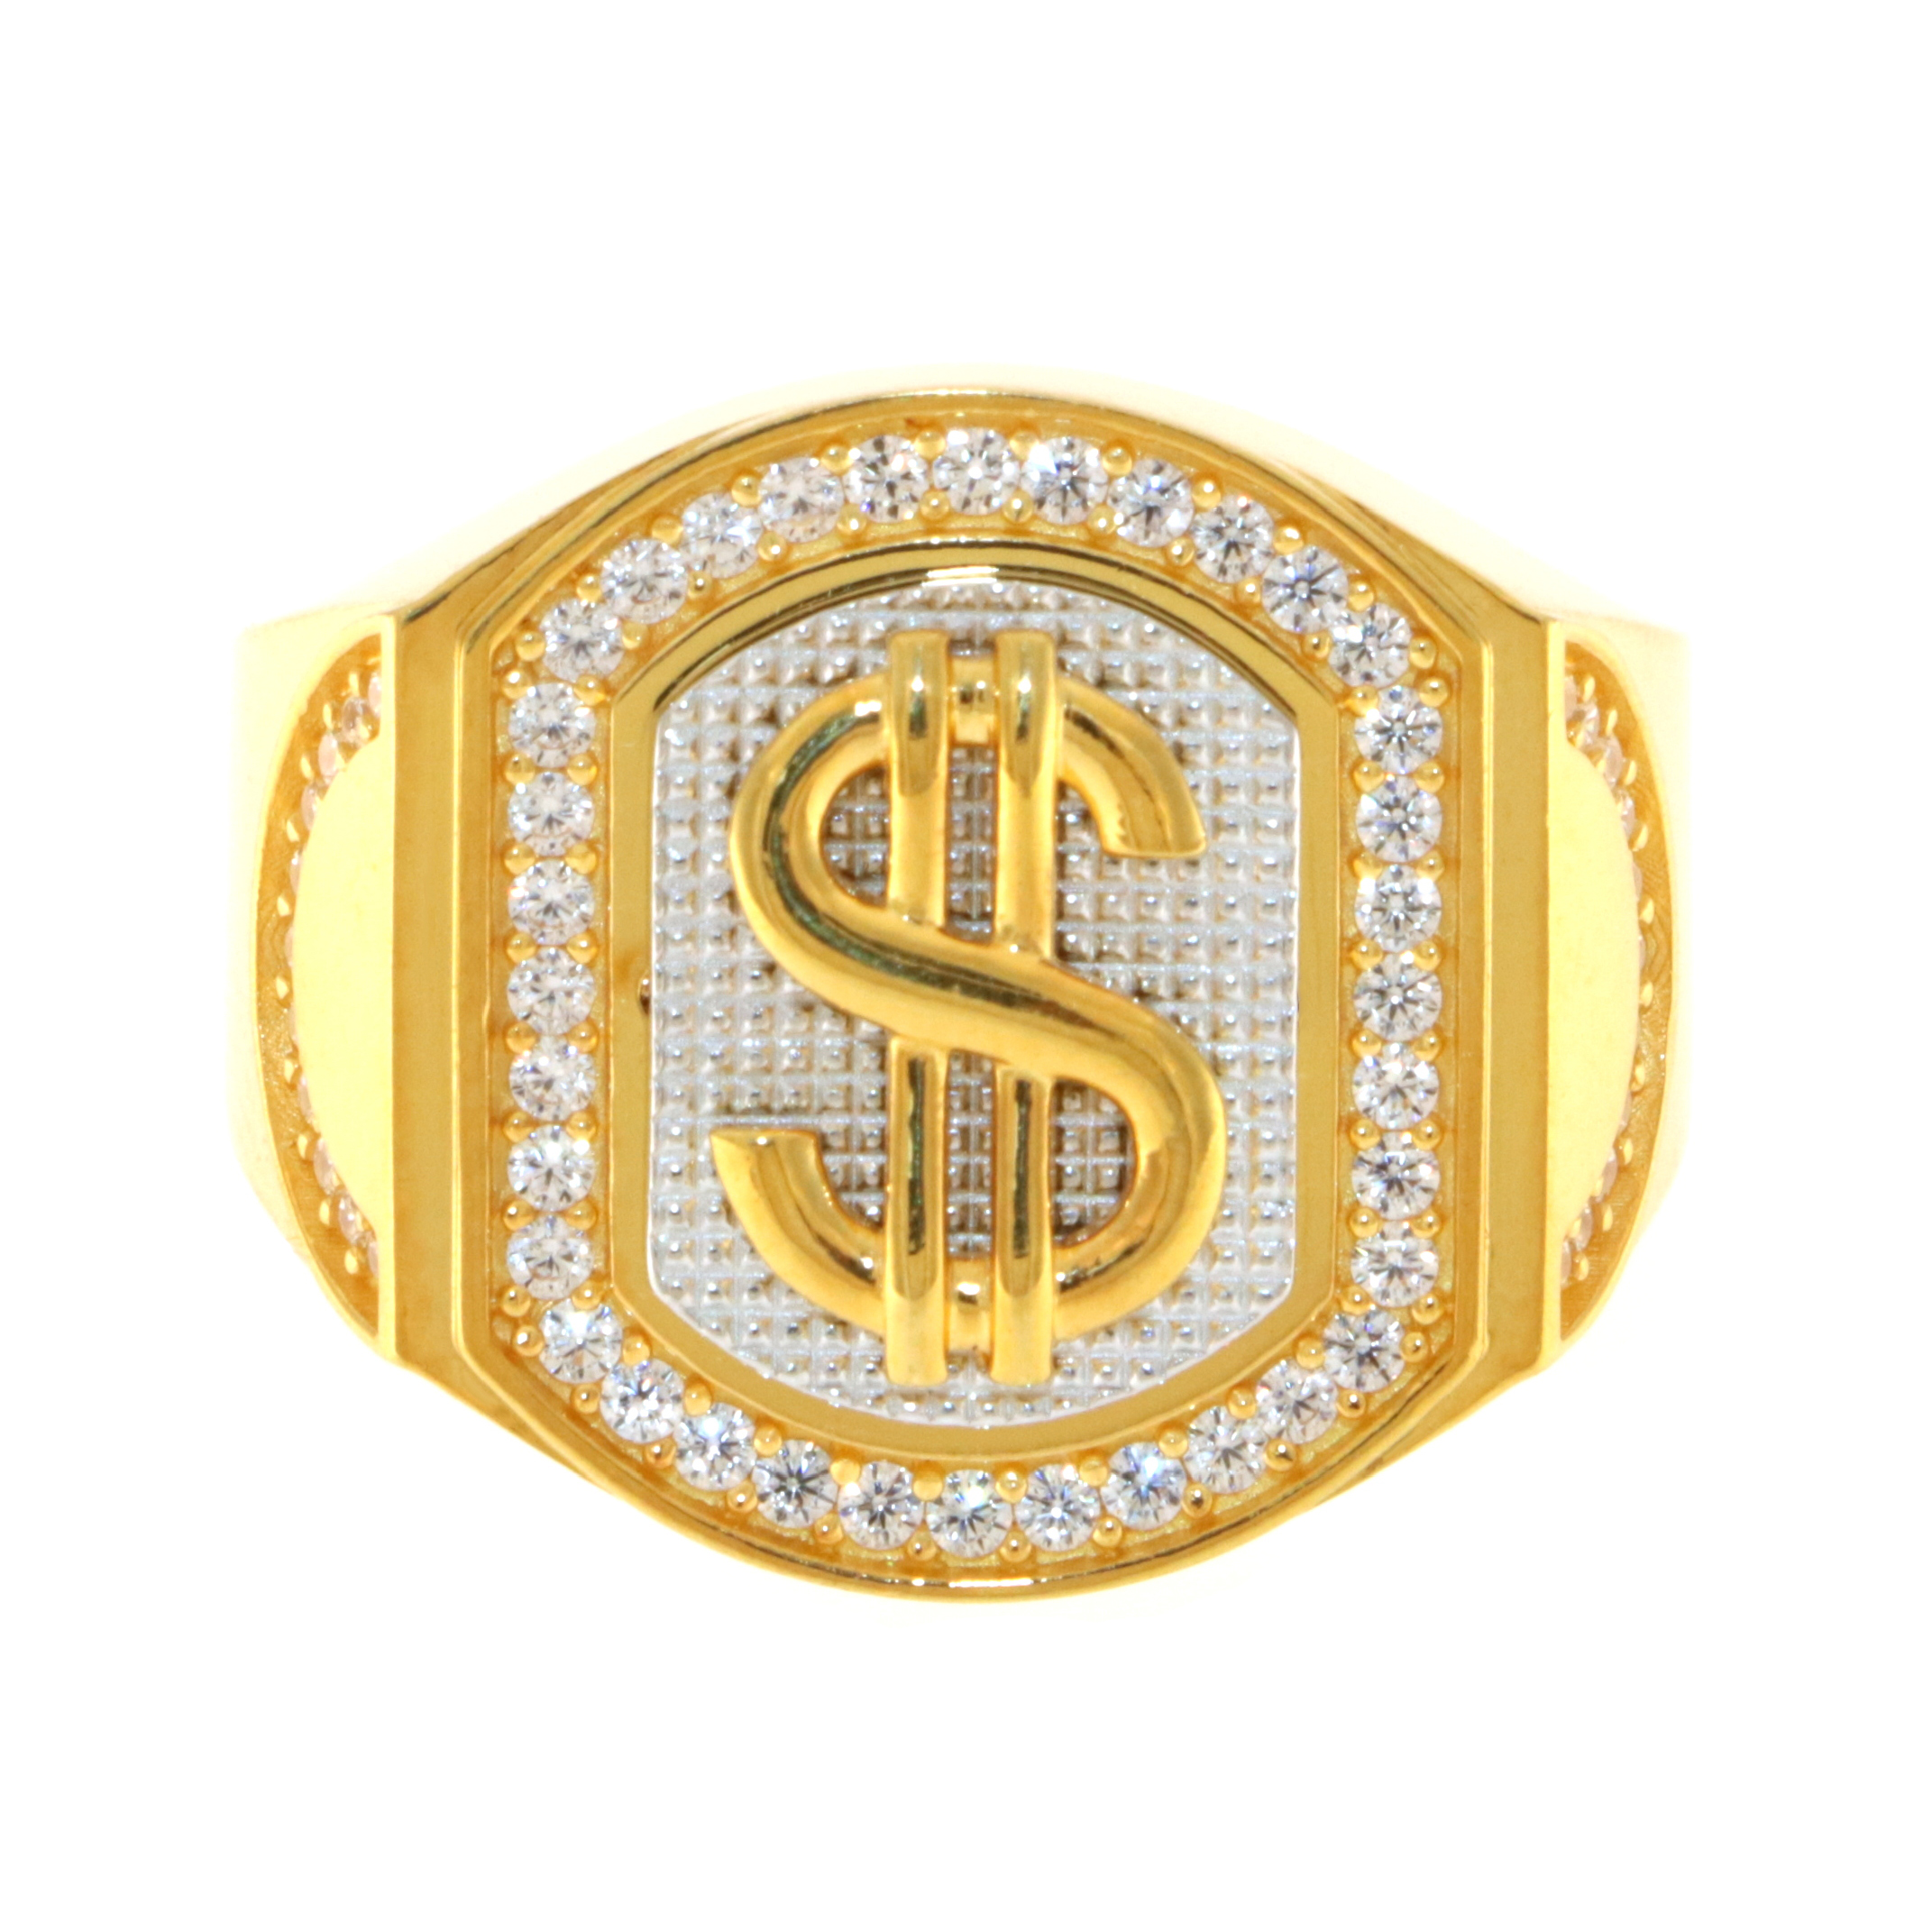 22ct Gold Dollar Ring